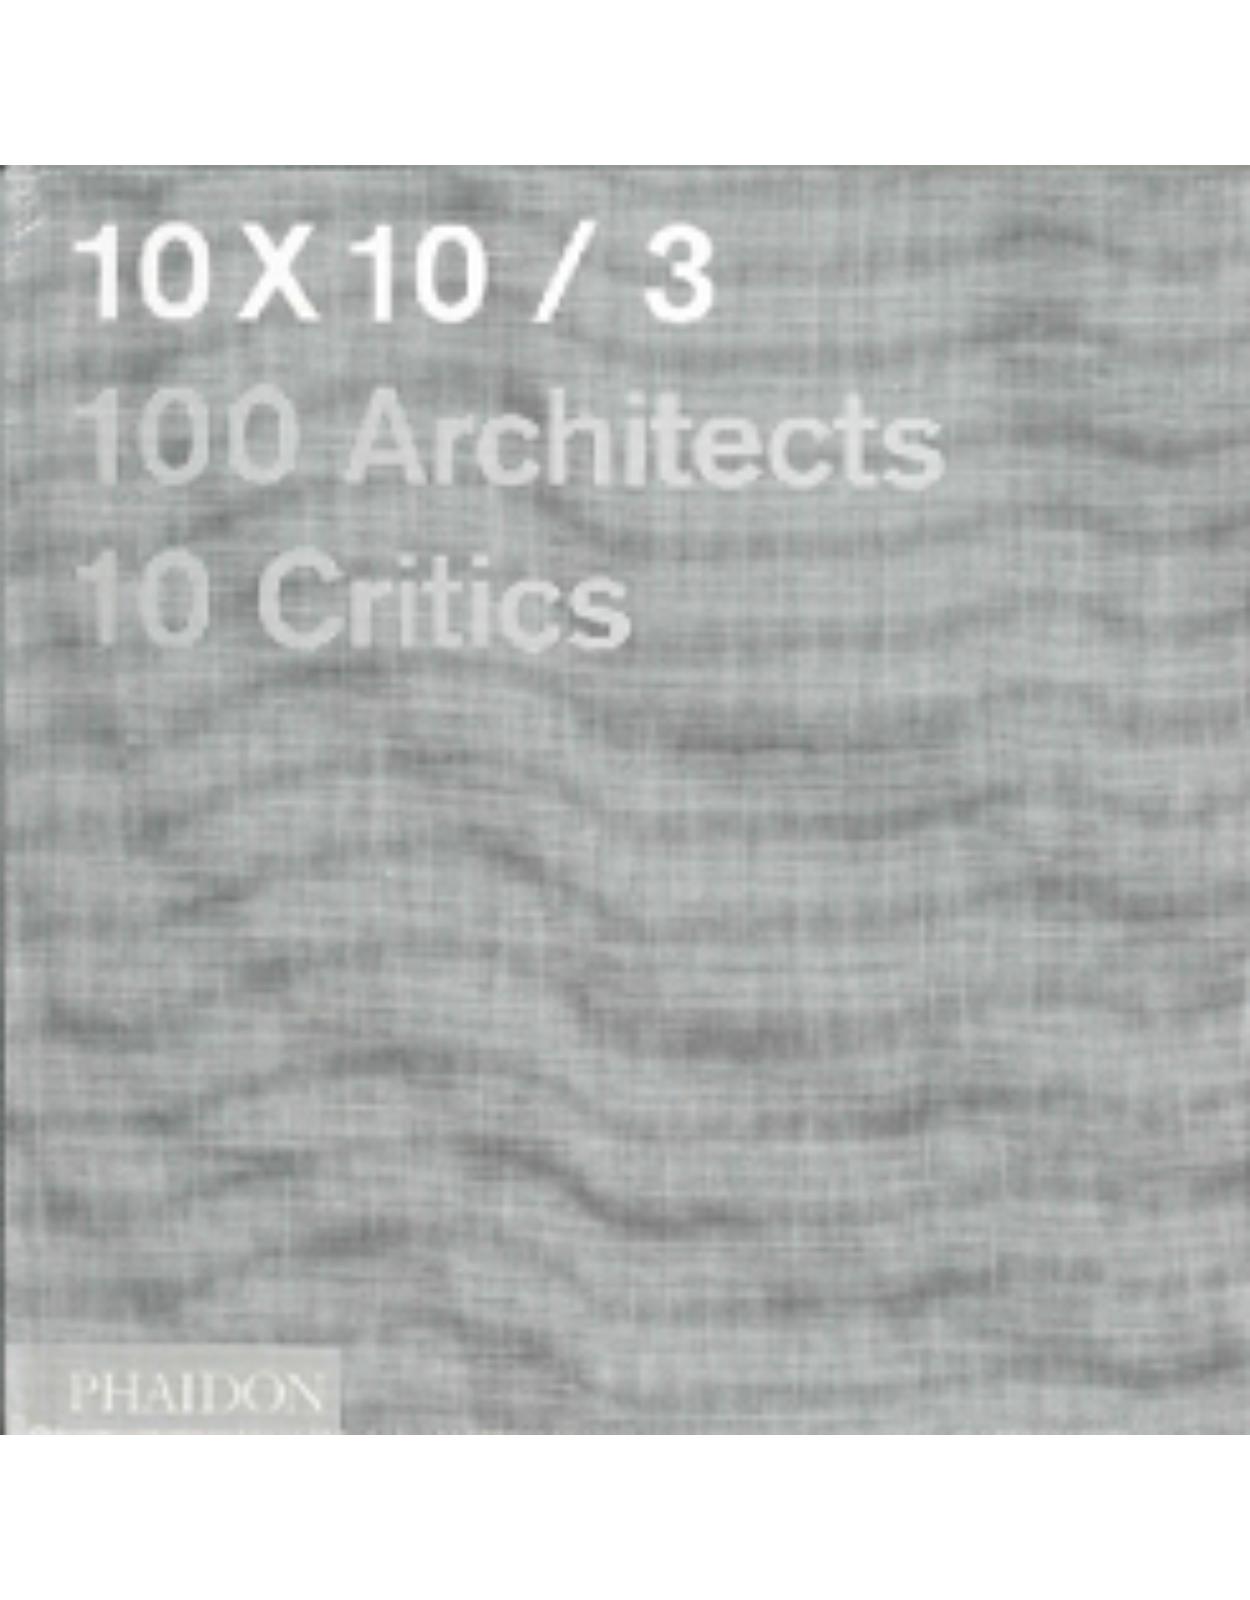 100 Architects, 10 Critics